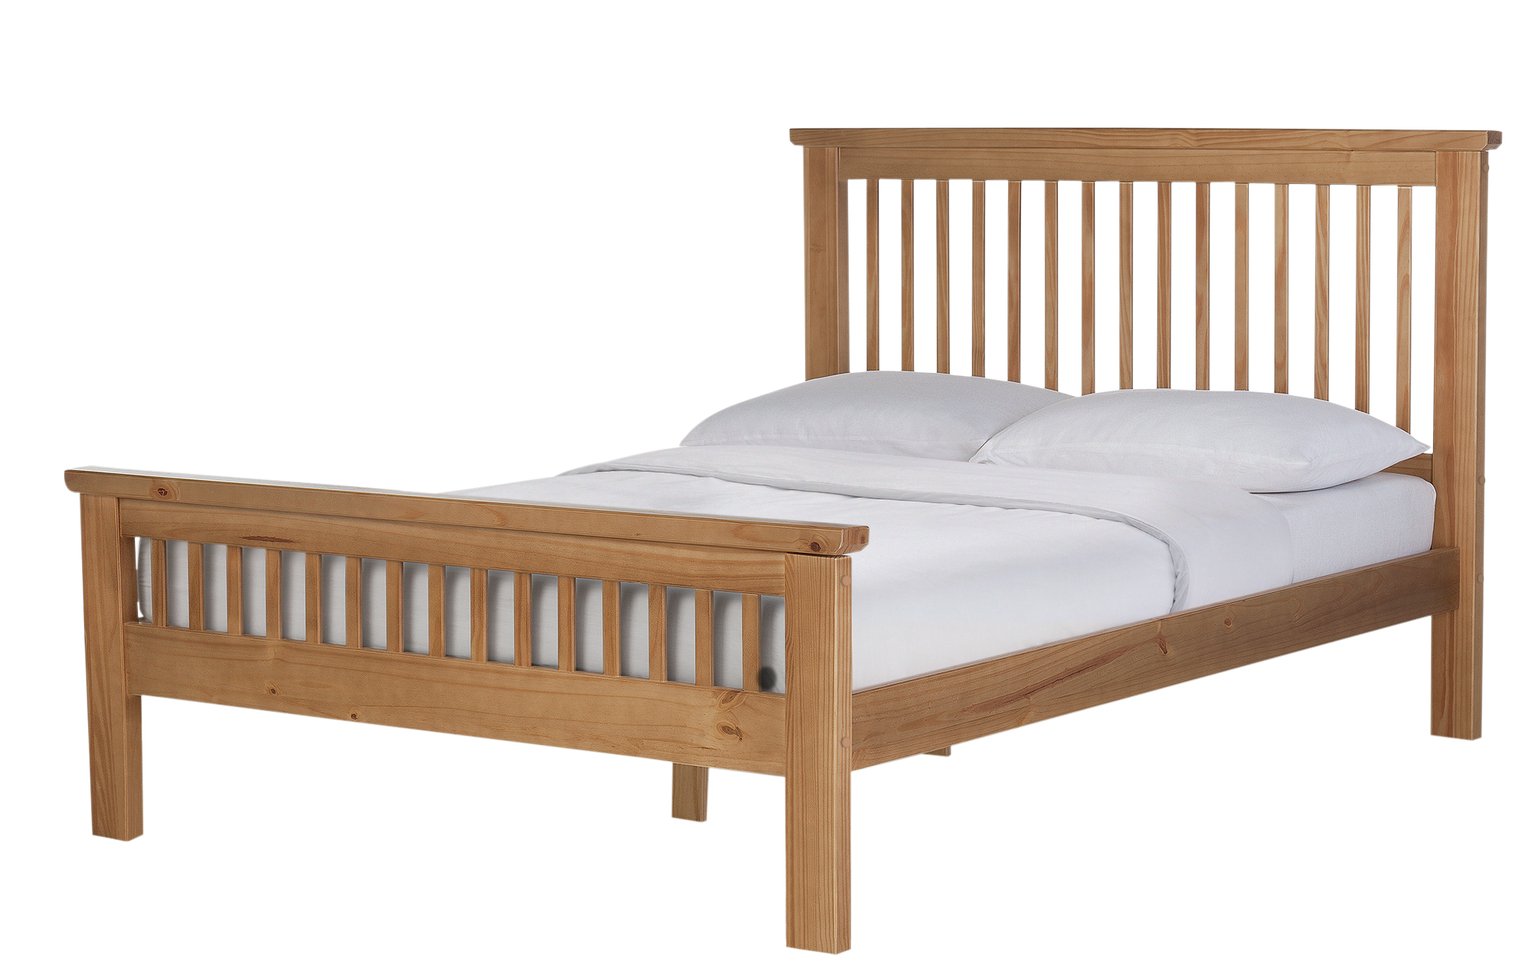 Argos Home Aubrey Kingsize Wooden Bed Frame - Oak Stain